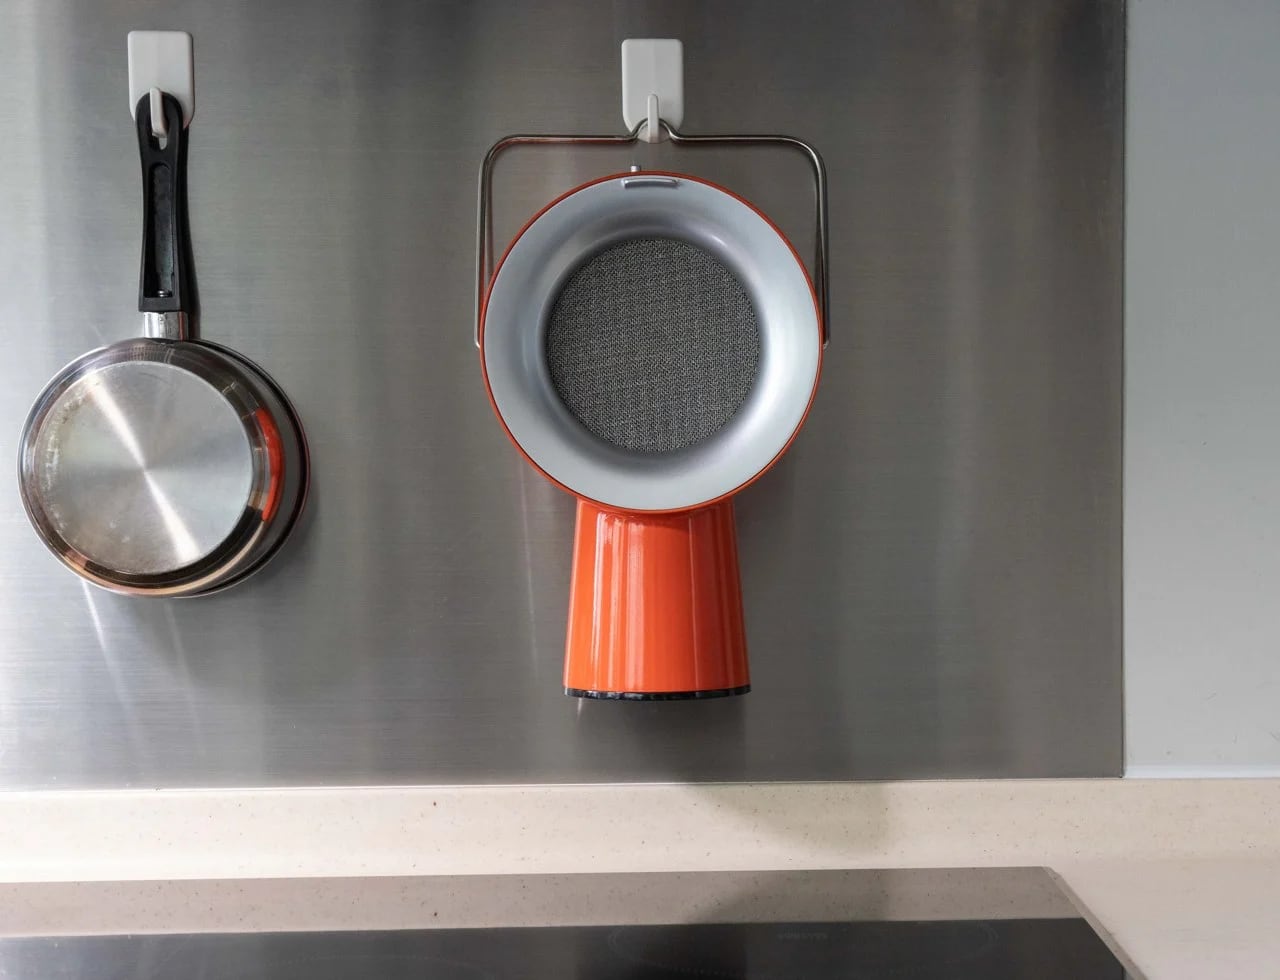 Portable range hood keeps kitchens smoke- and grease-free